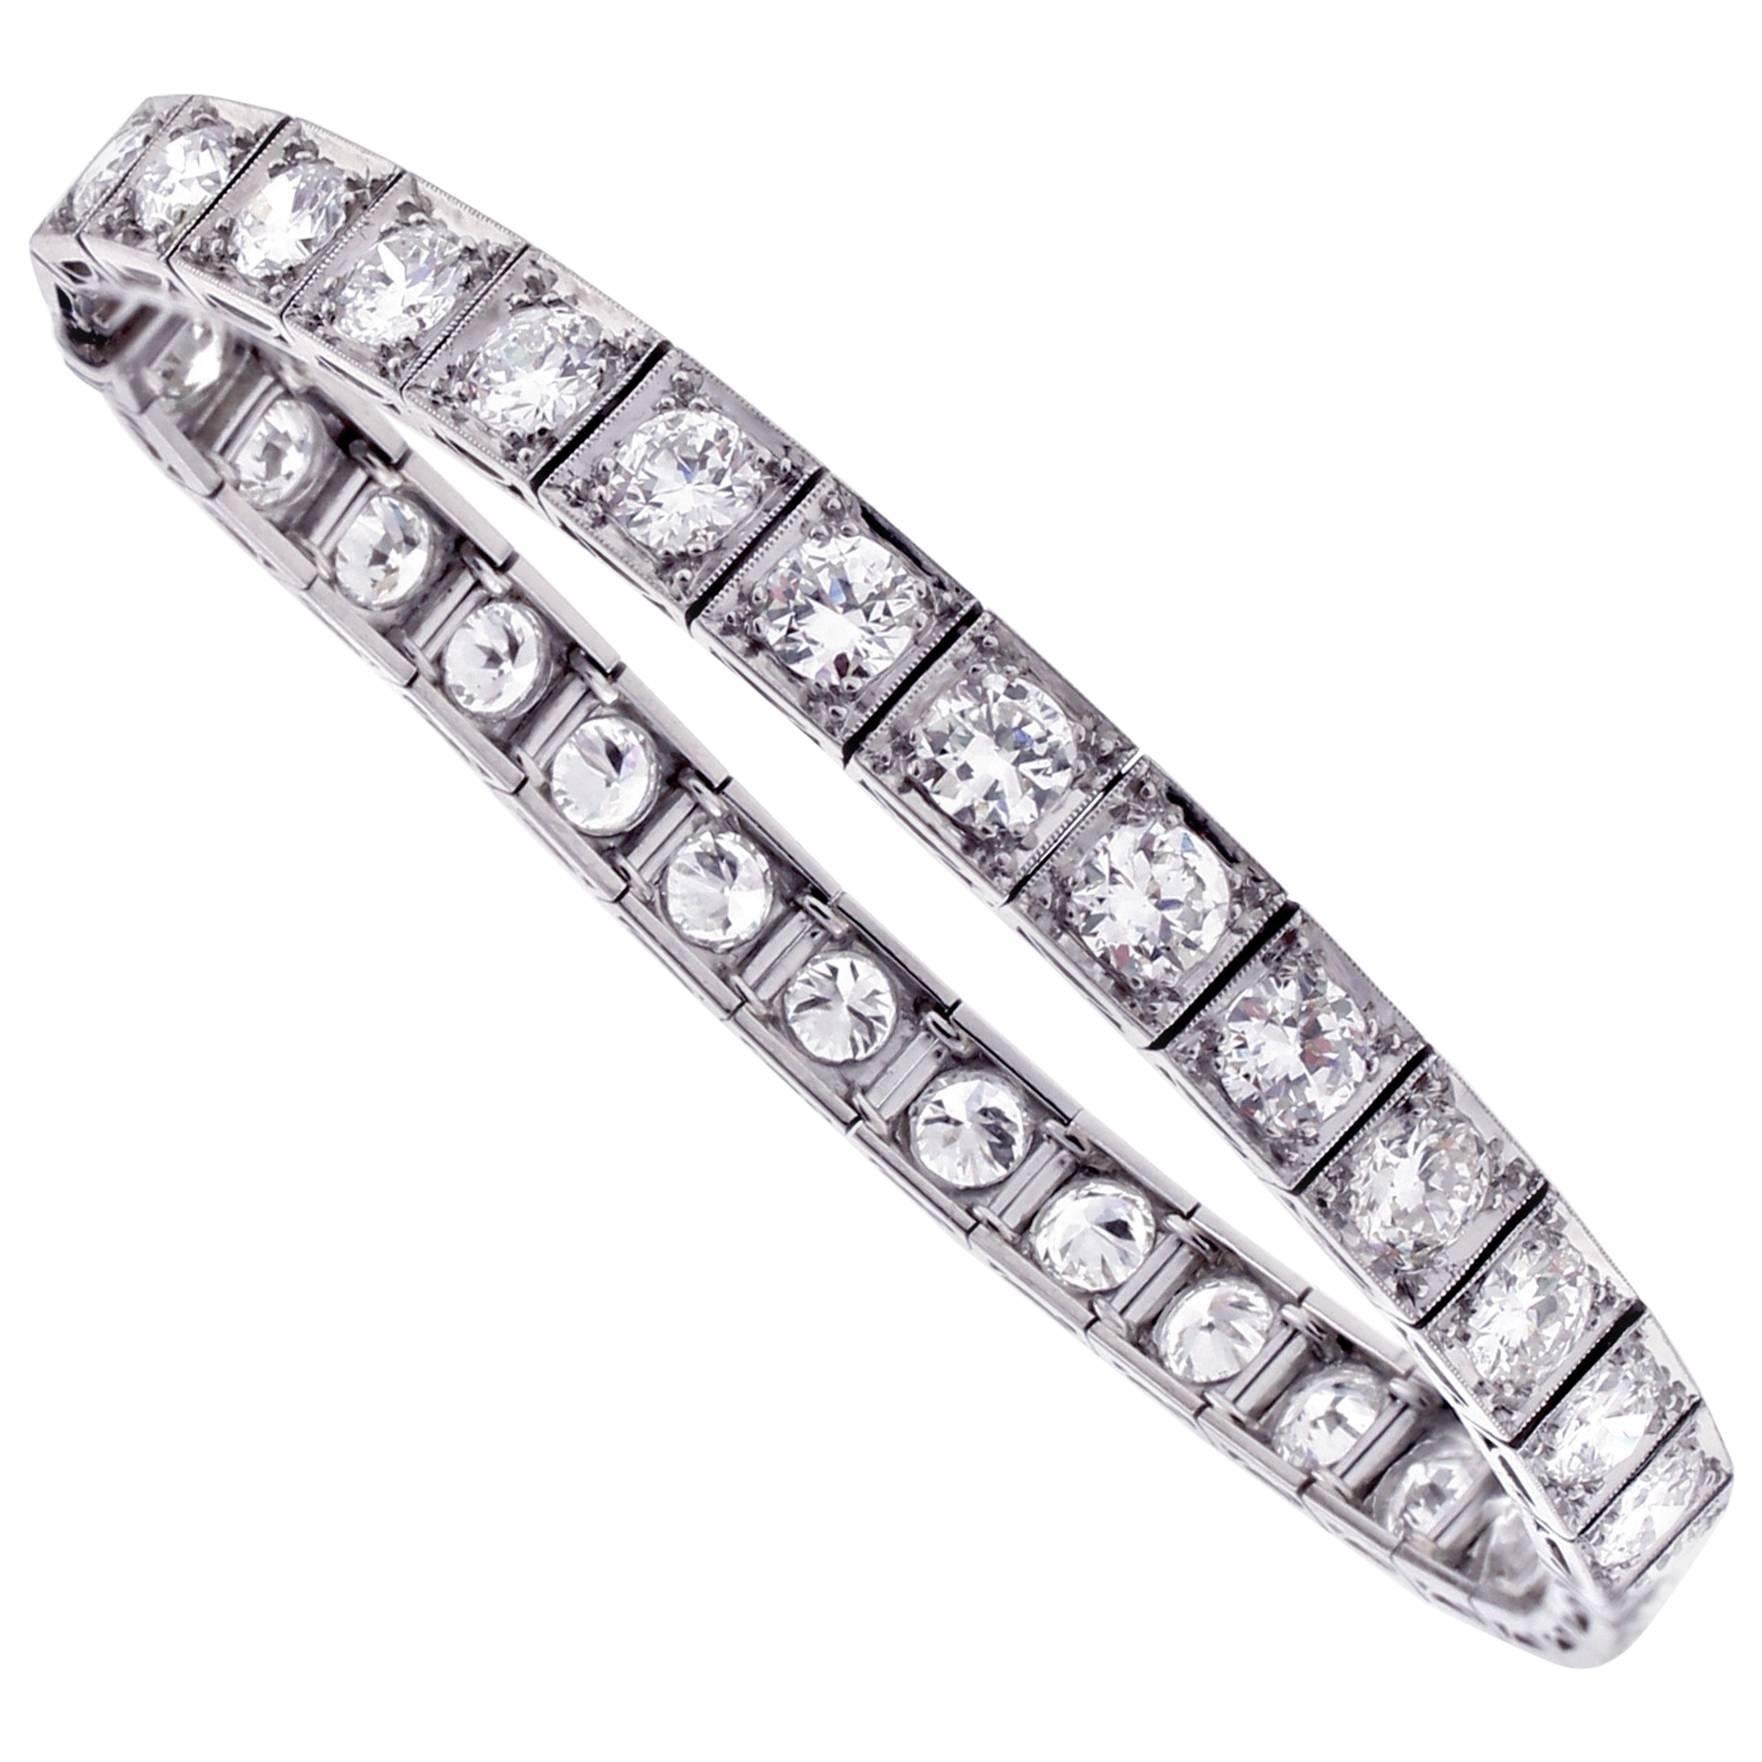 1930s Straight-Line Diamond Bracelet